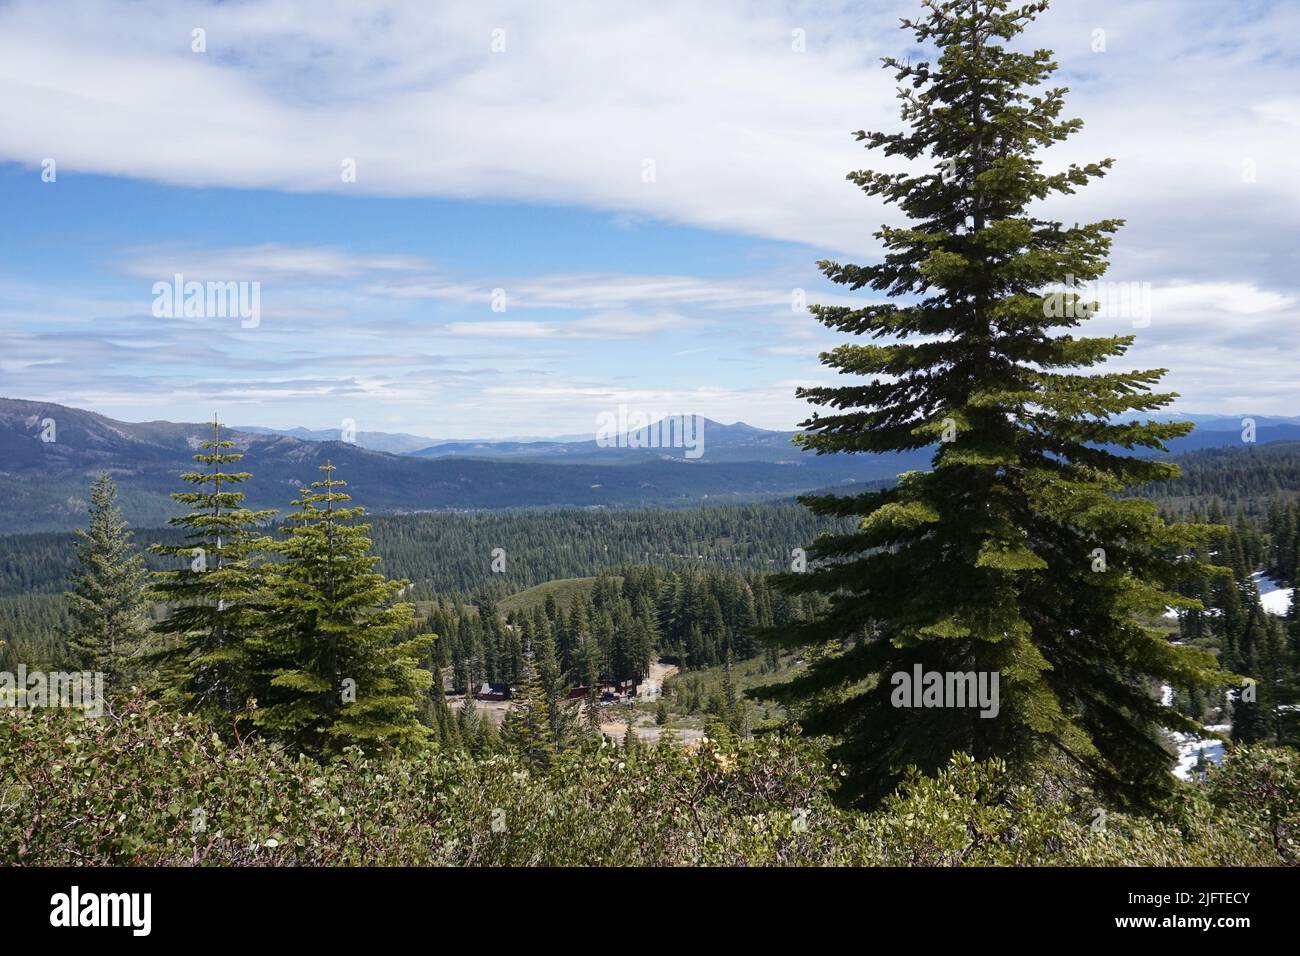 View of the Sierra Nevada mountains near Graeagle, California. Stock Photo